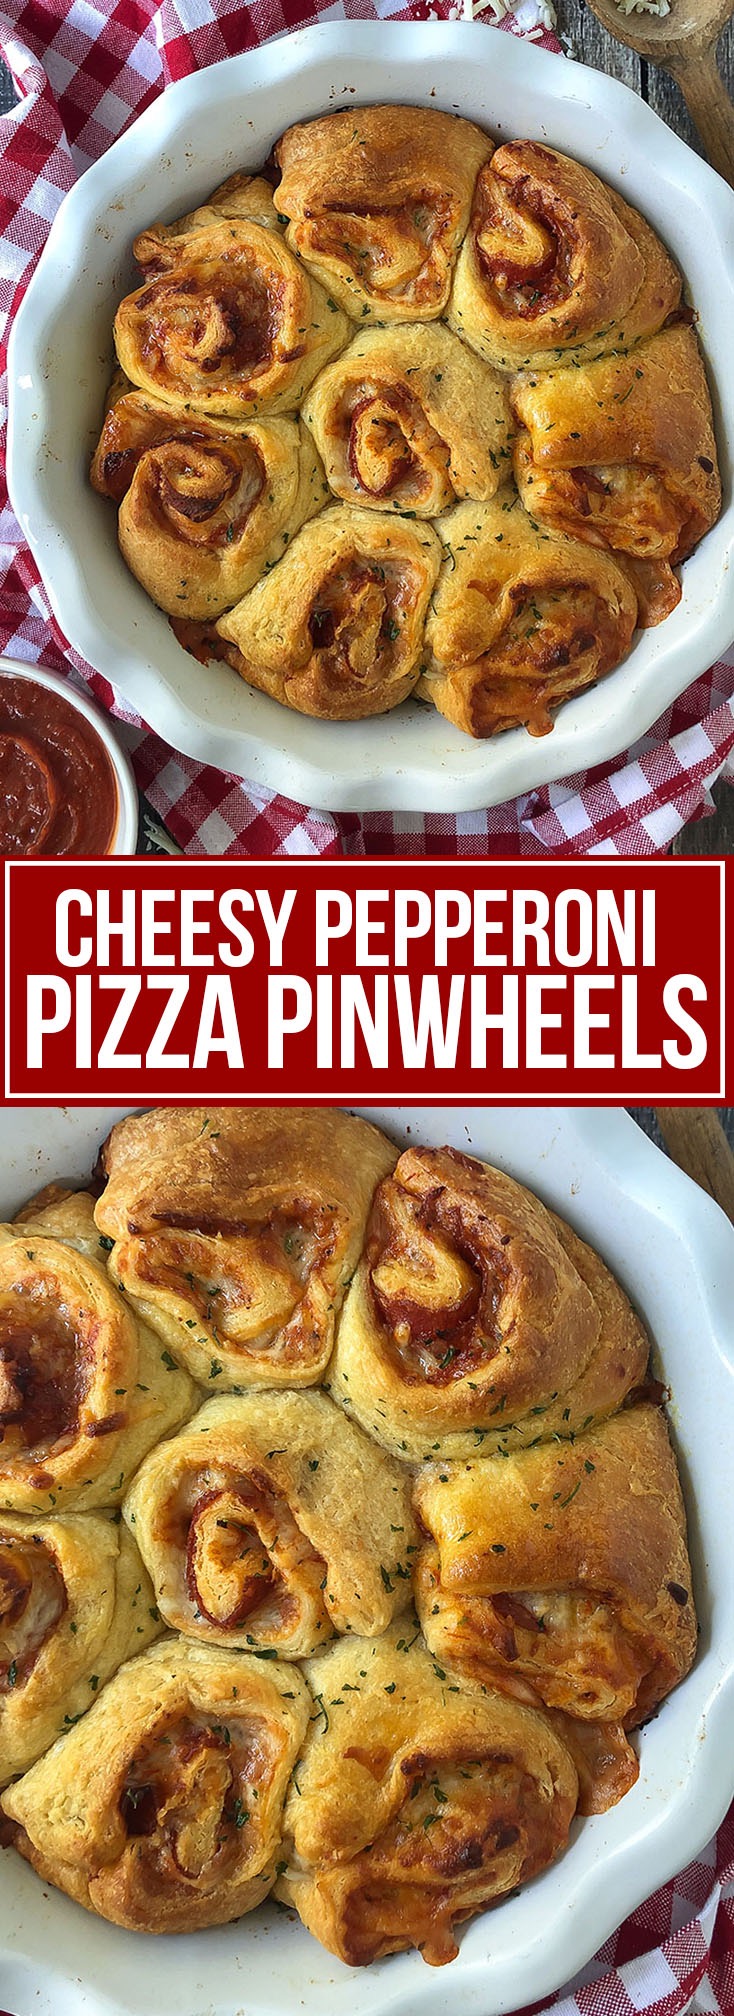 CHEESY PEPPERONI PIZZA PINWHEELS